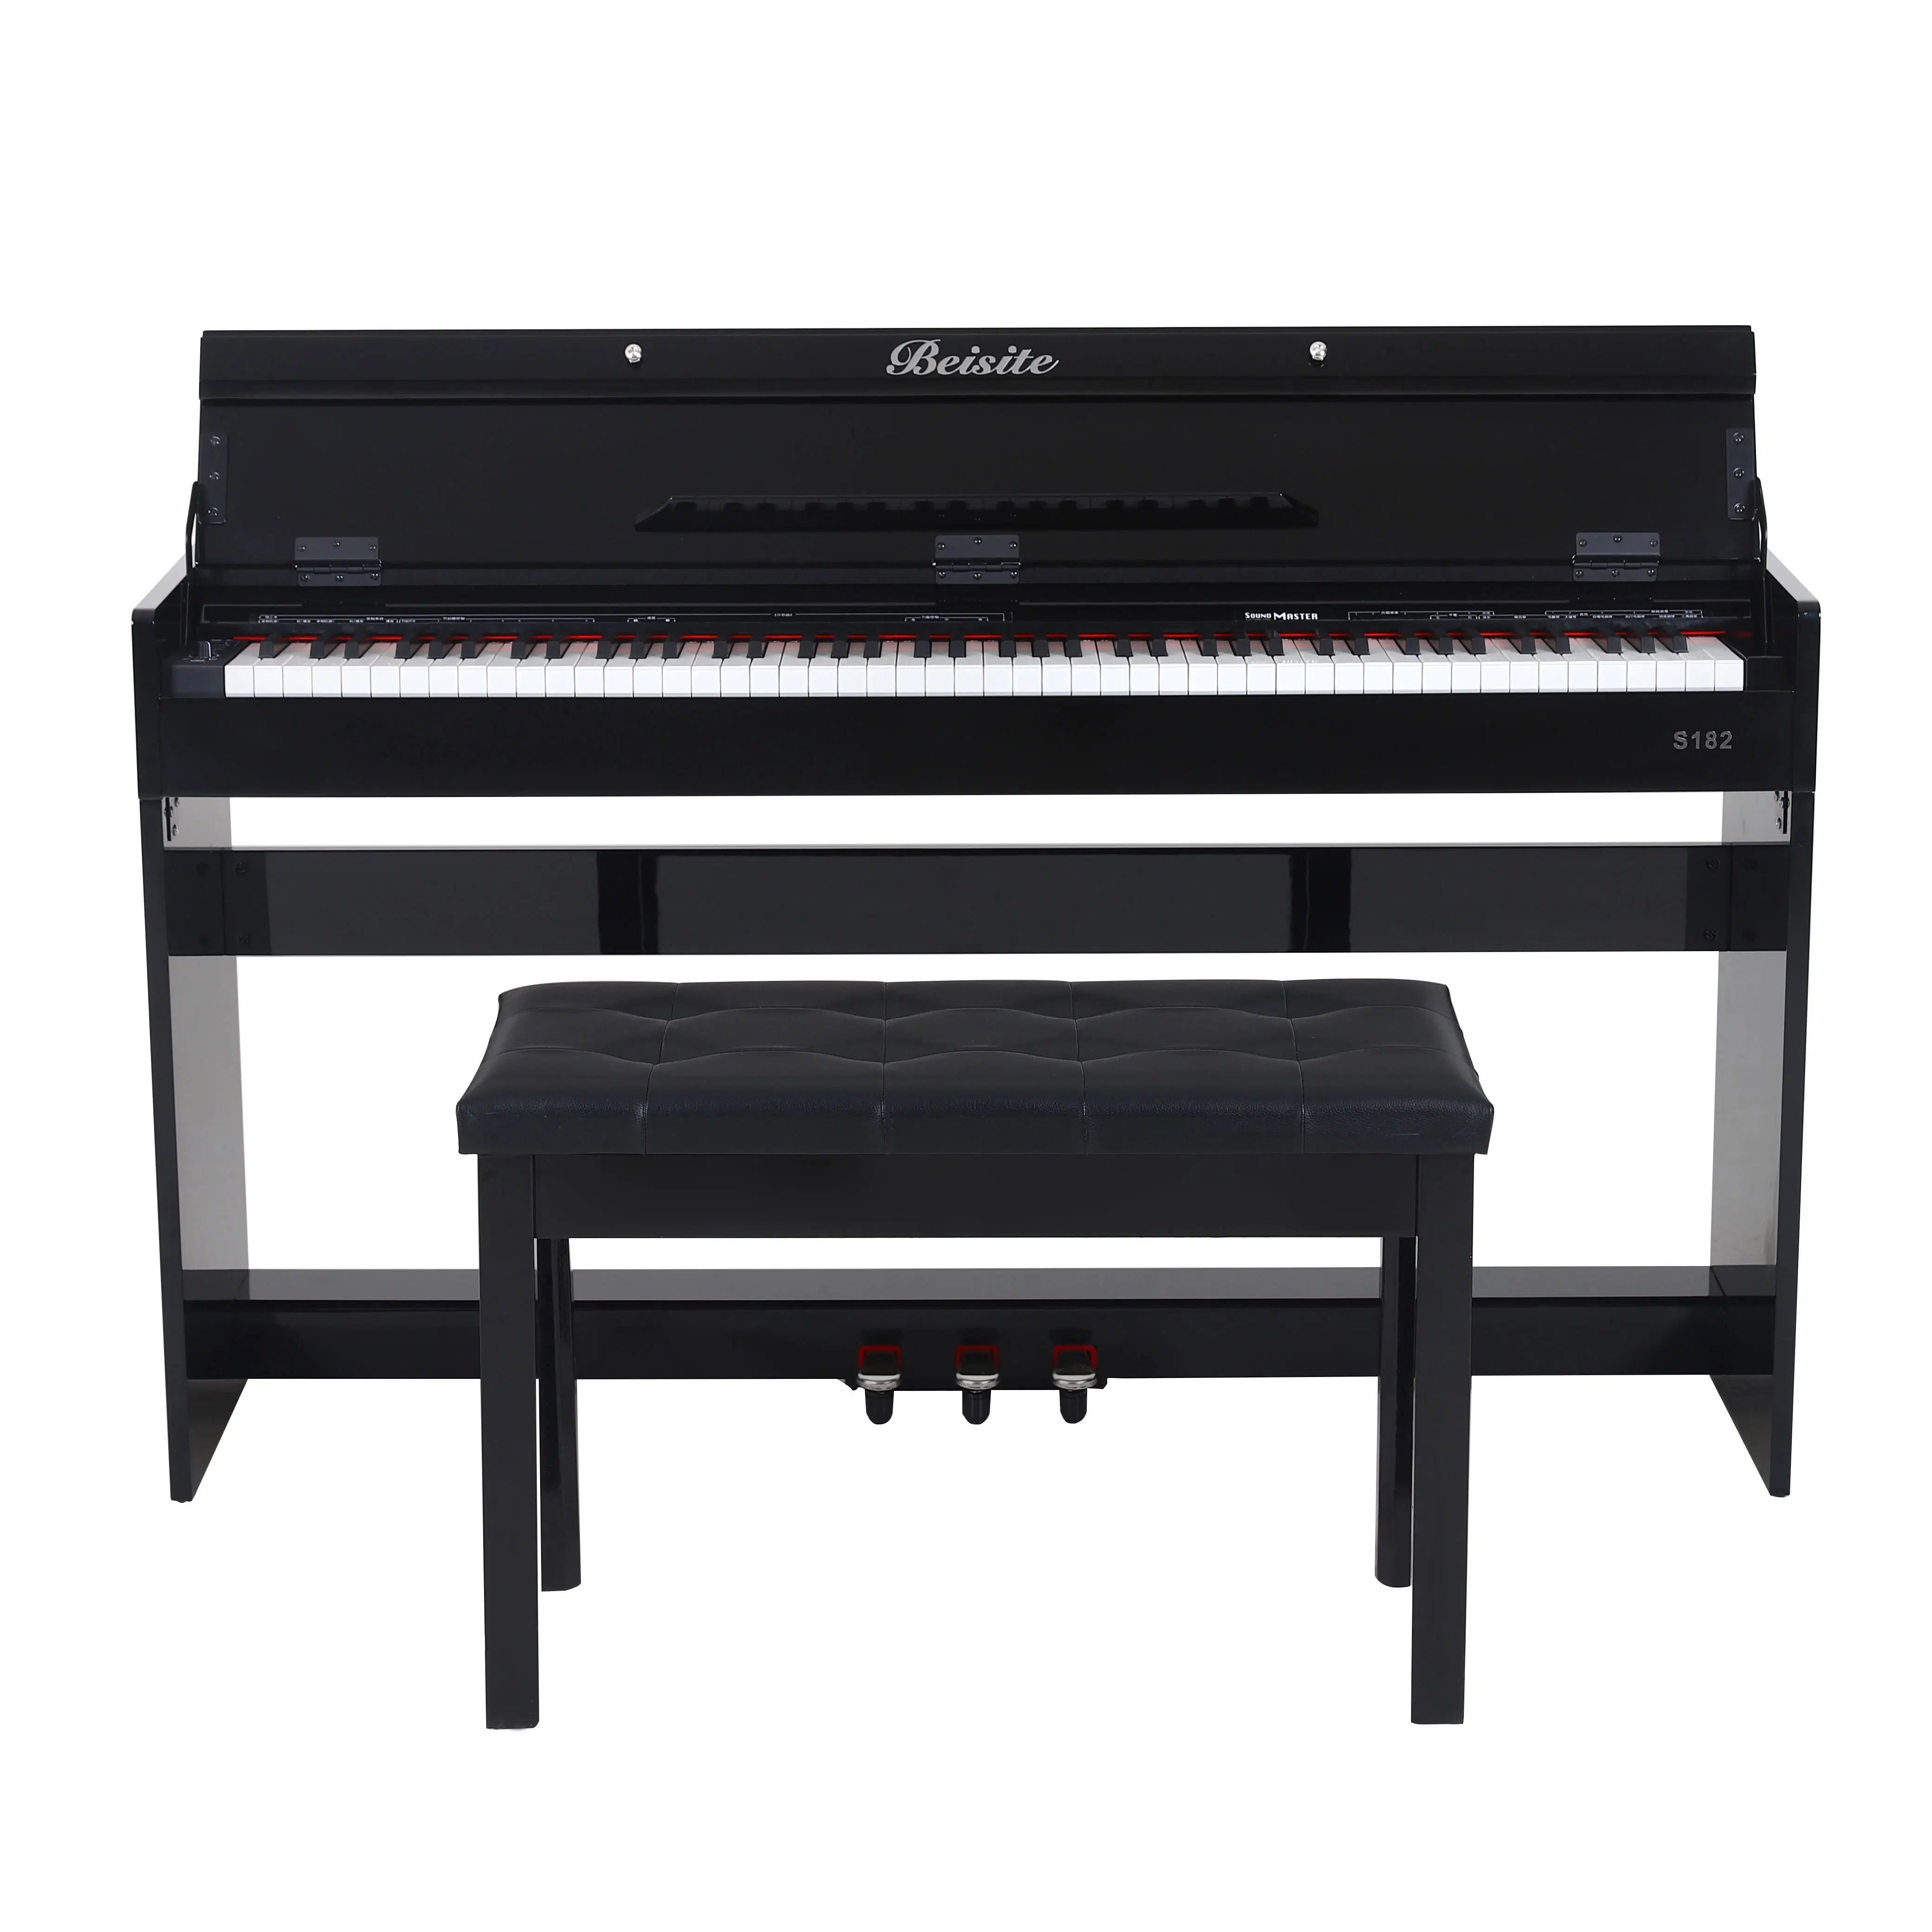 

Multifunctional digital piano 182 upright eletronic piano digital 88 keys, Black